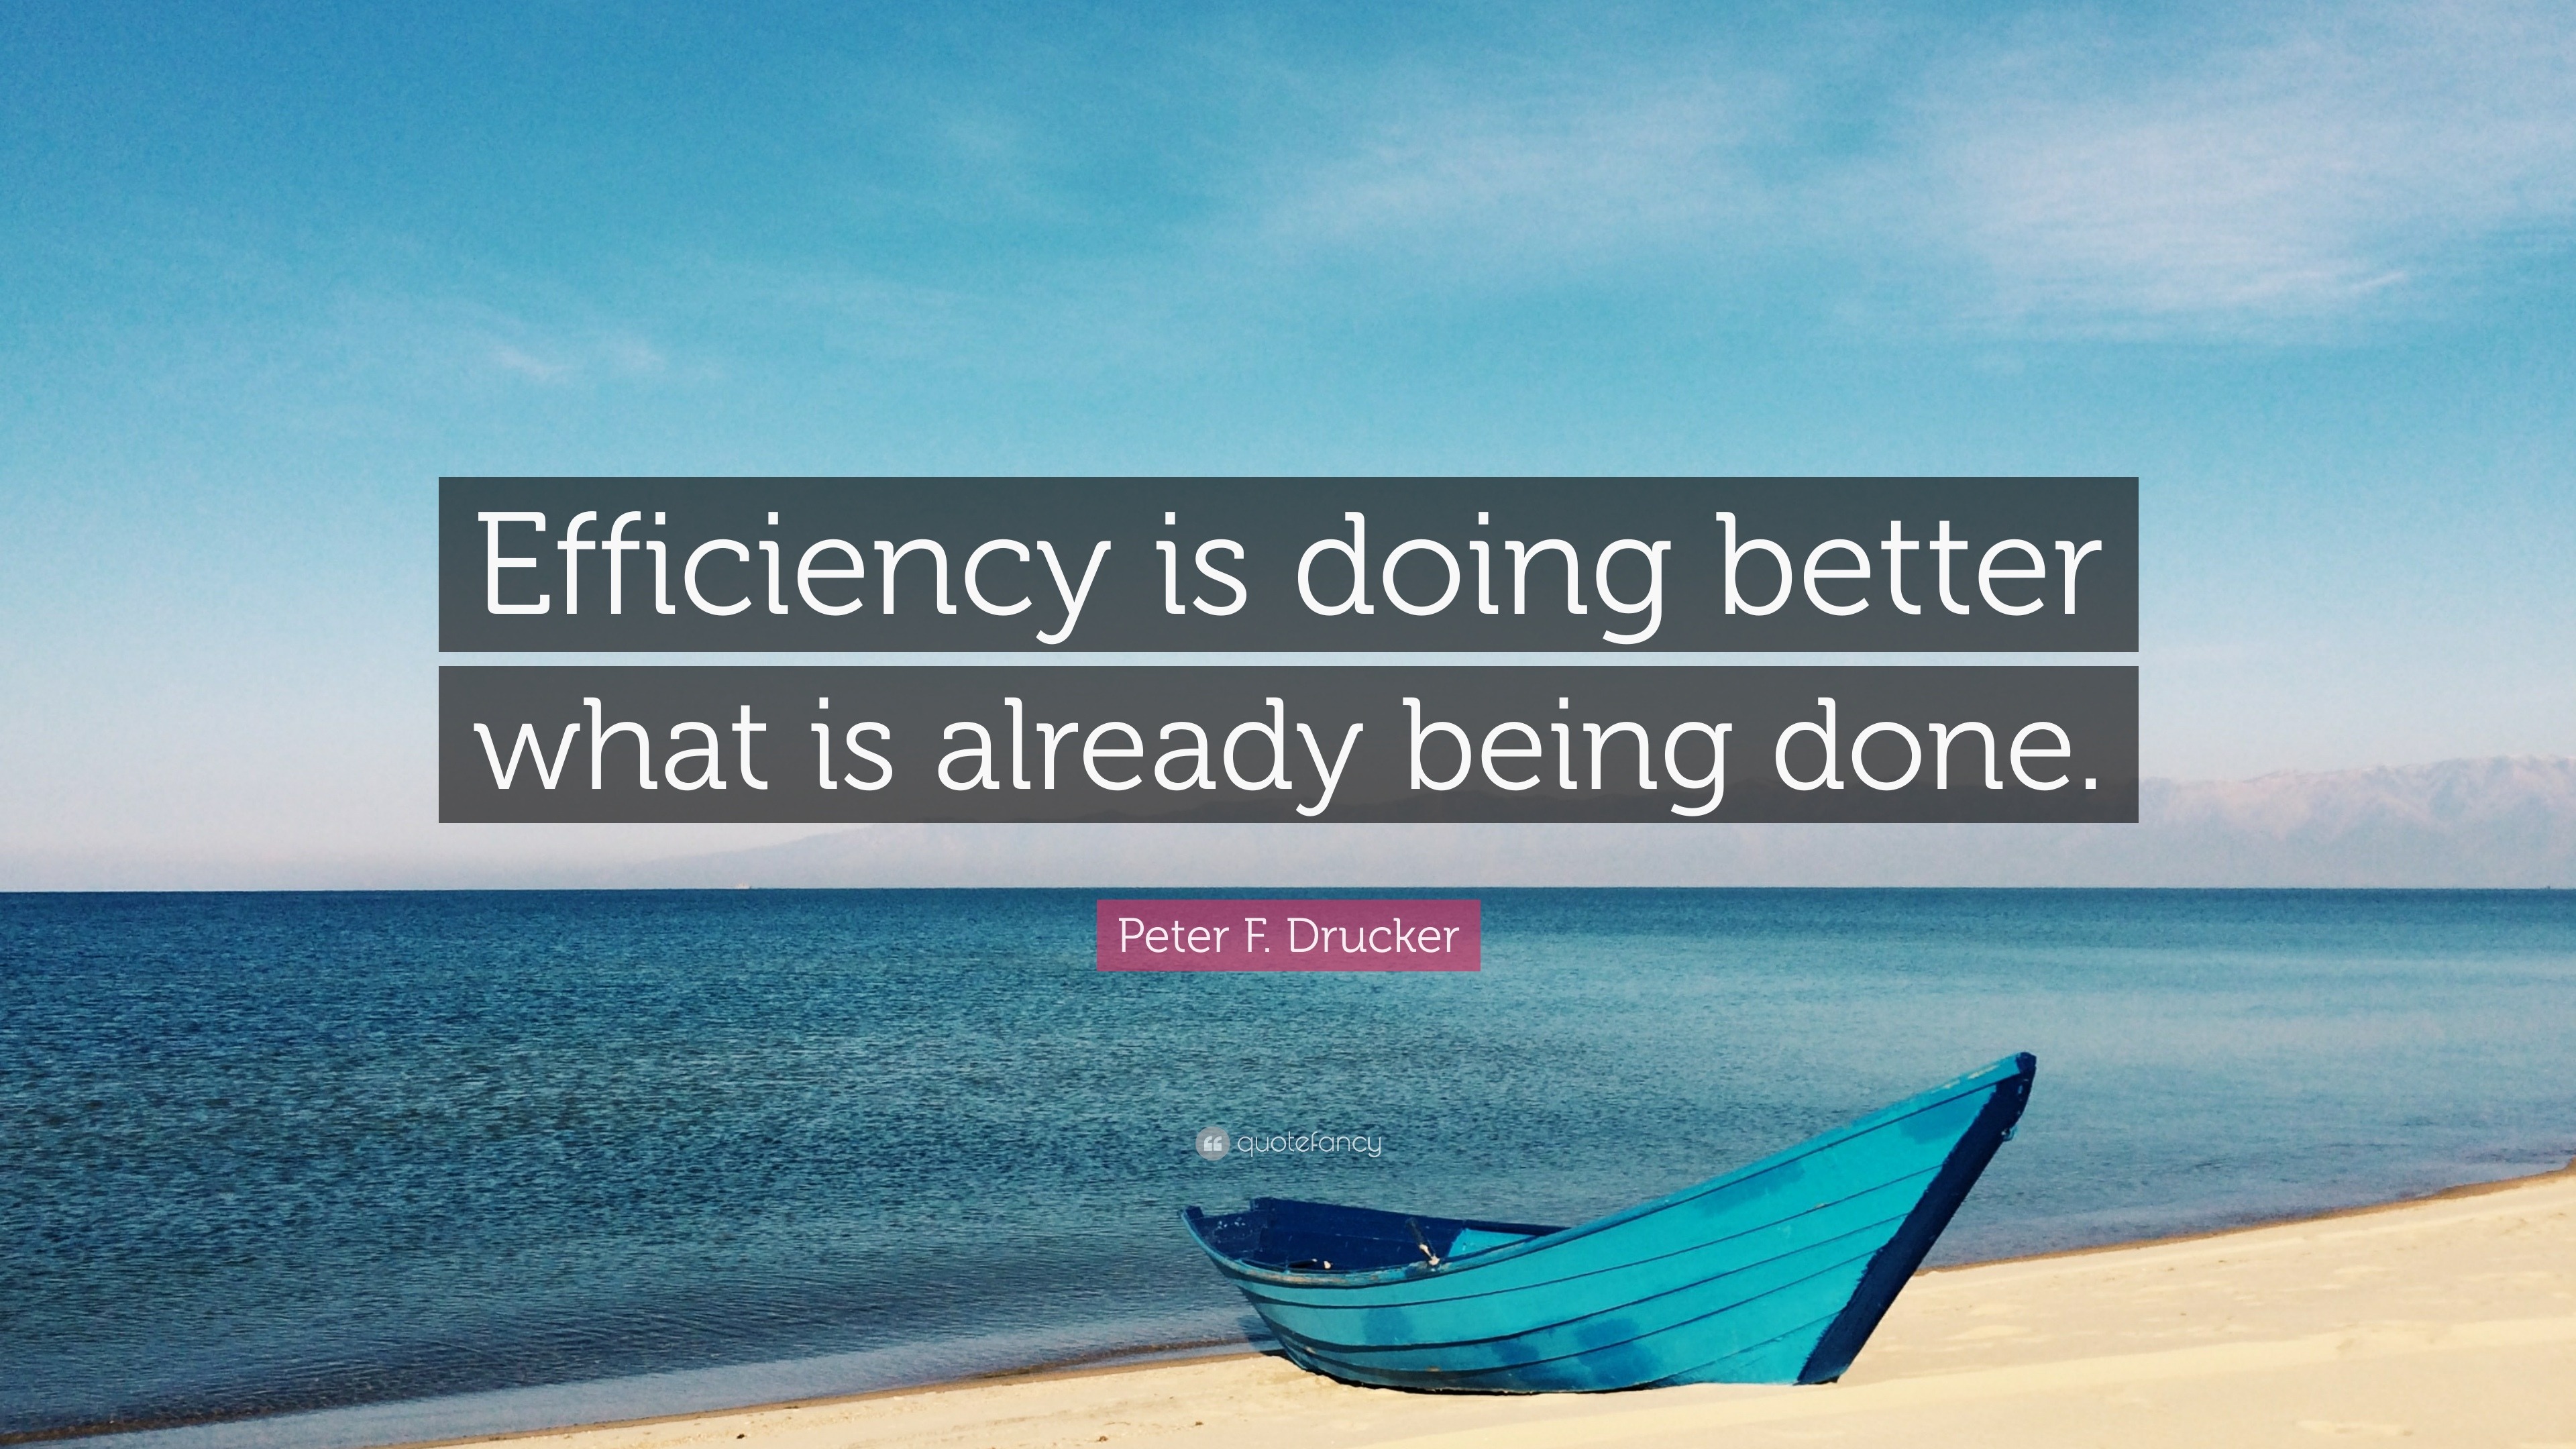 Peter F. Drucker Quote “Efficiency is doing better what